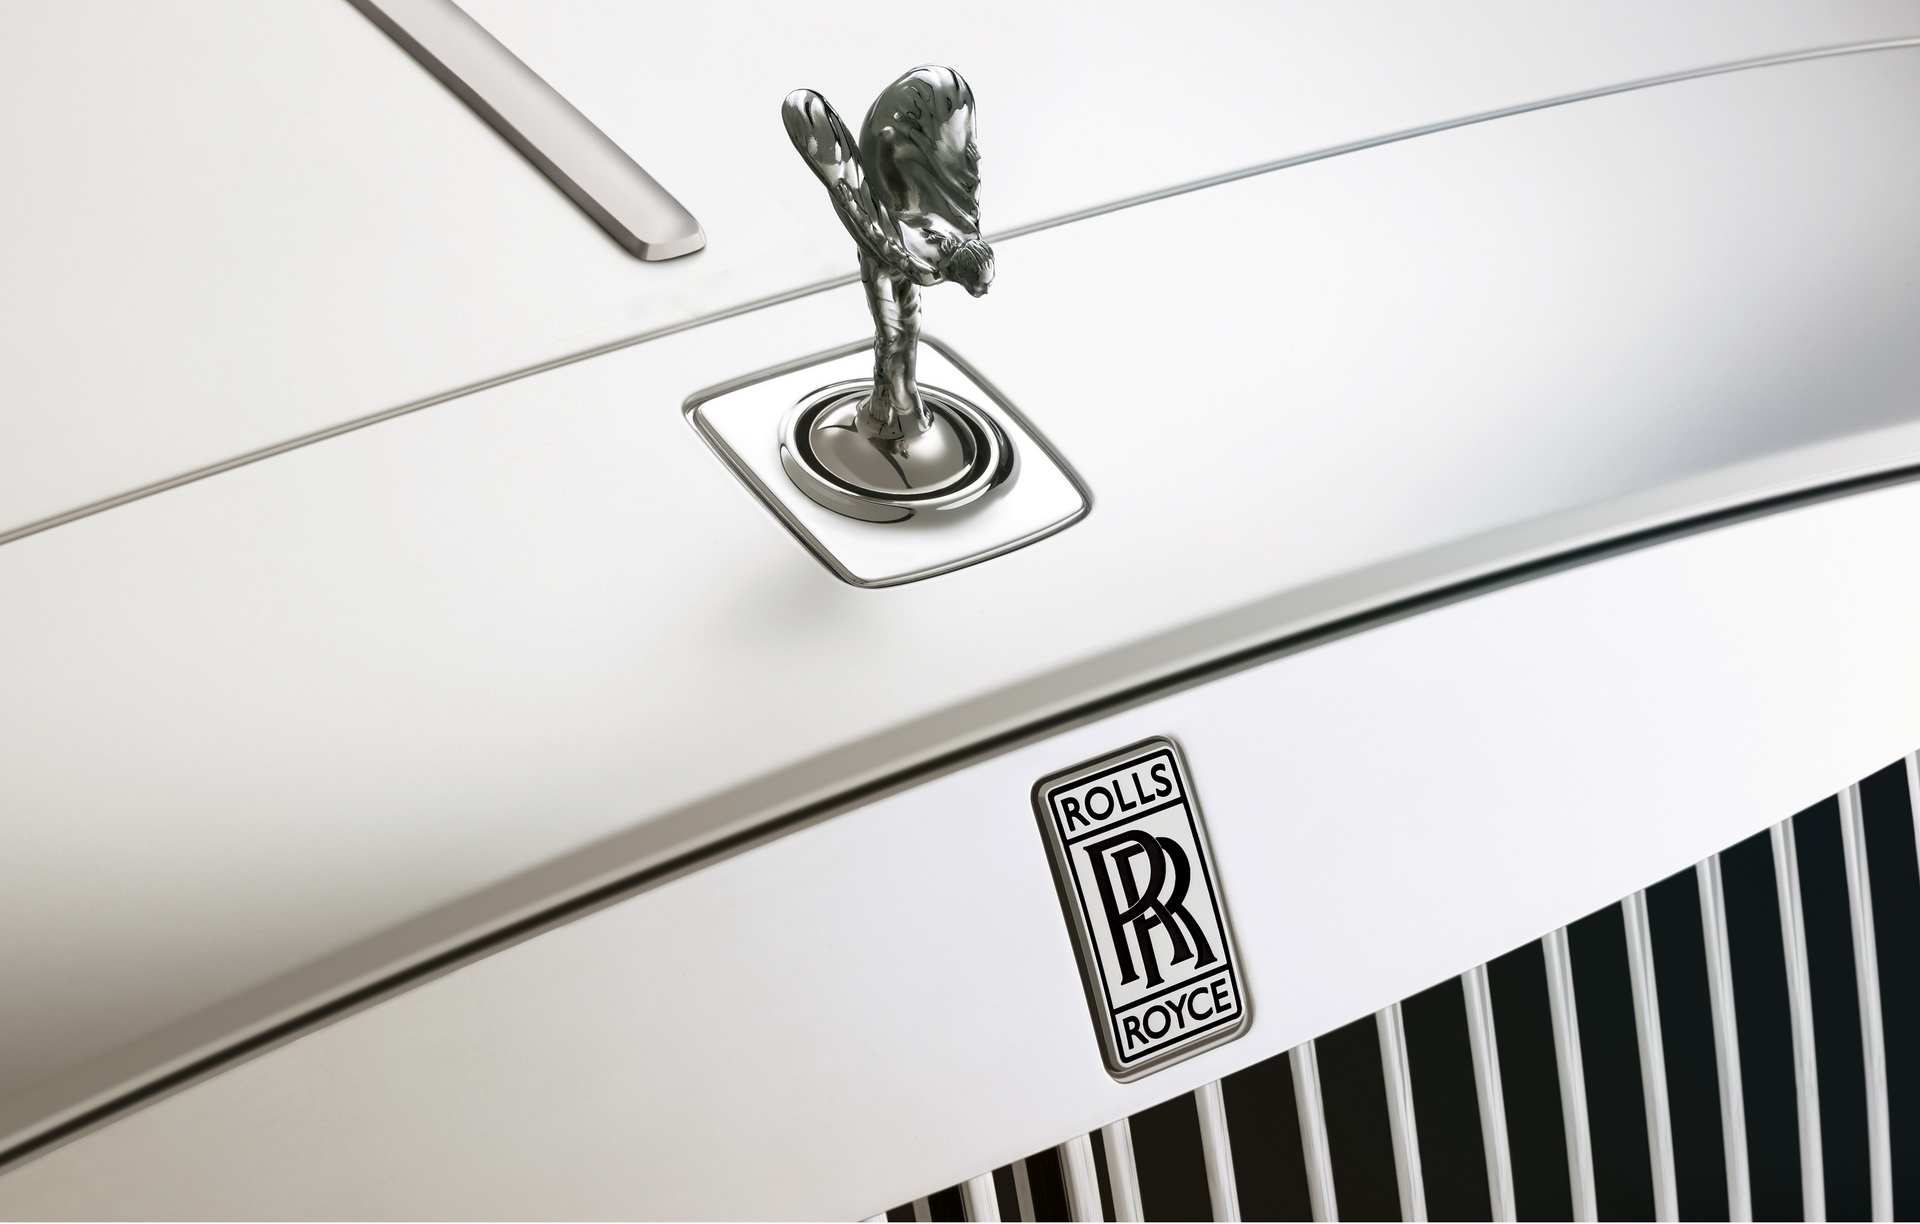 Emblem Rolls Royce Automobile  Free photo on Pixabay  Pixabay